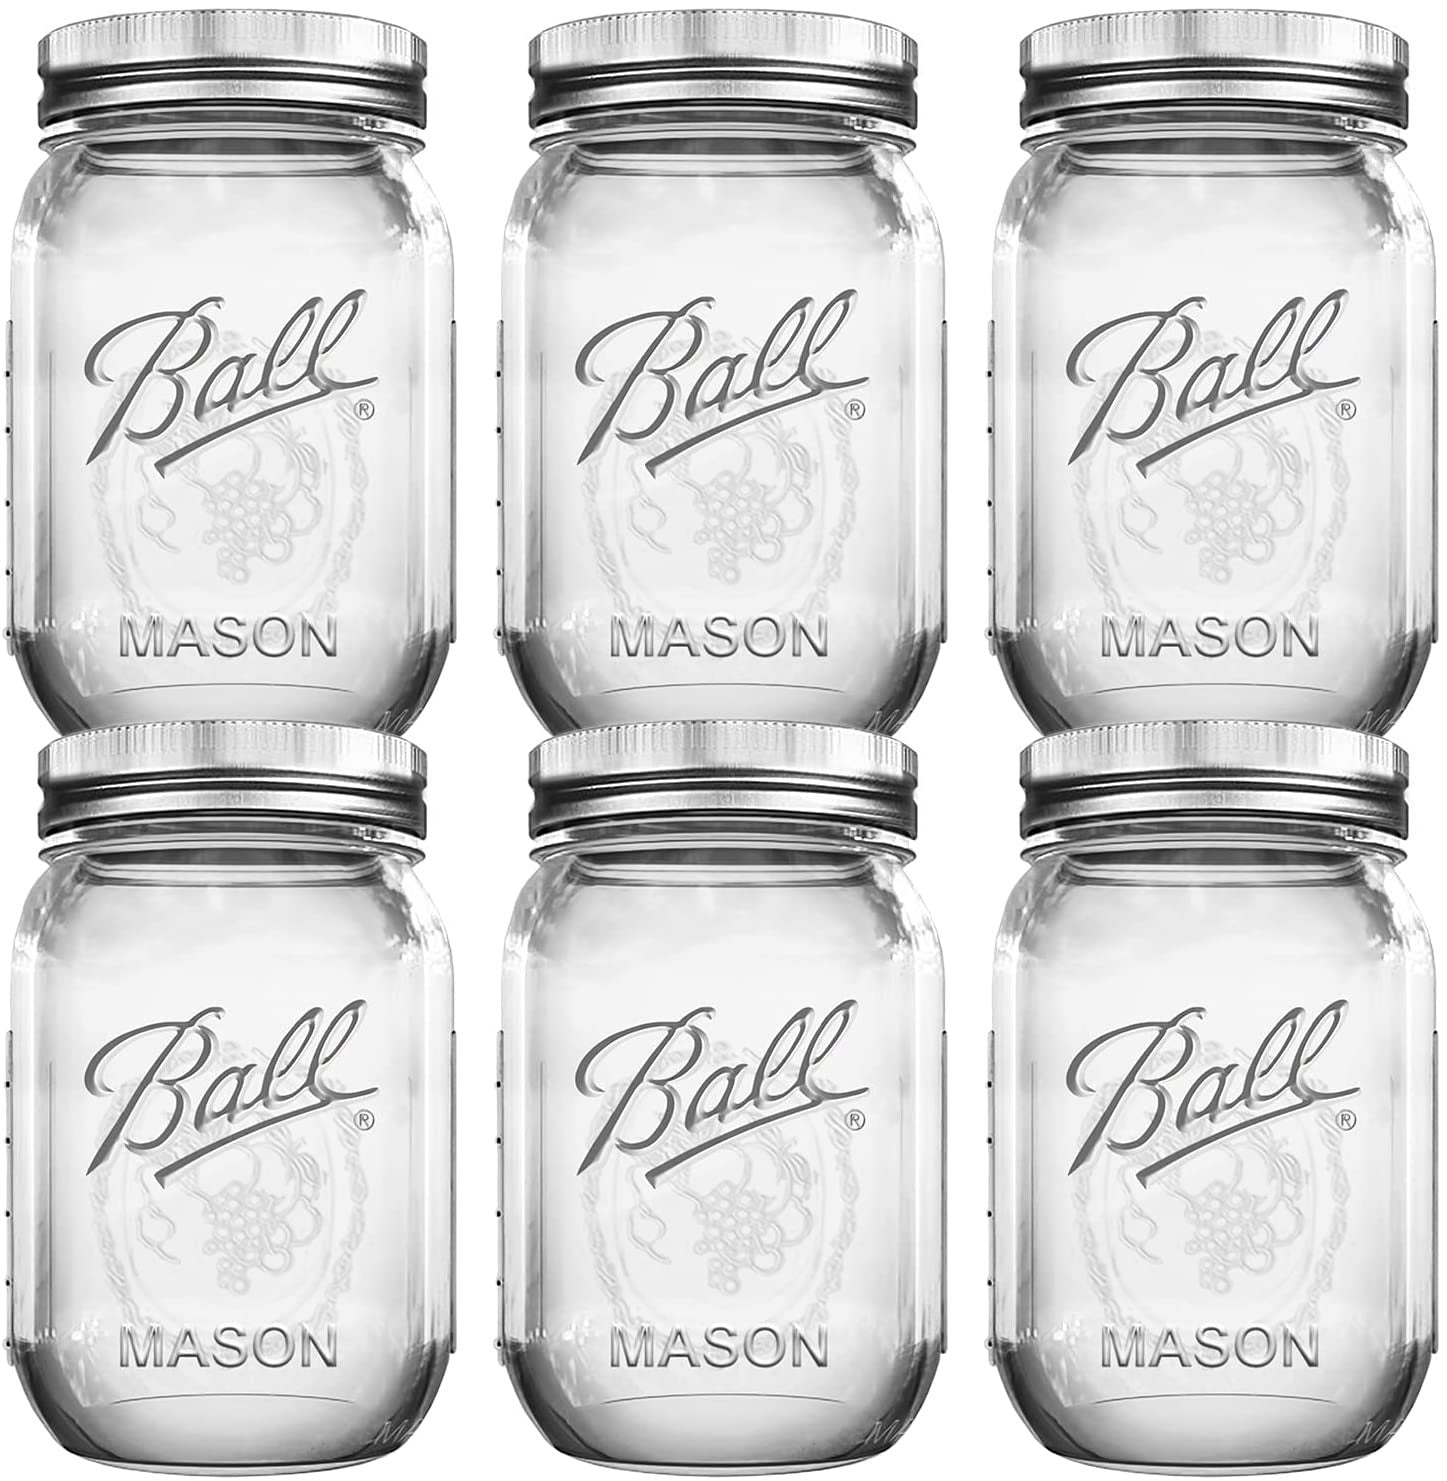 6 Pack - MASON JARS 16 oz Regular Mouth Glass Canning Jar Set with Lids & Bands